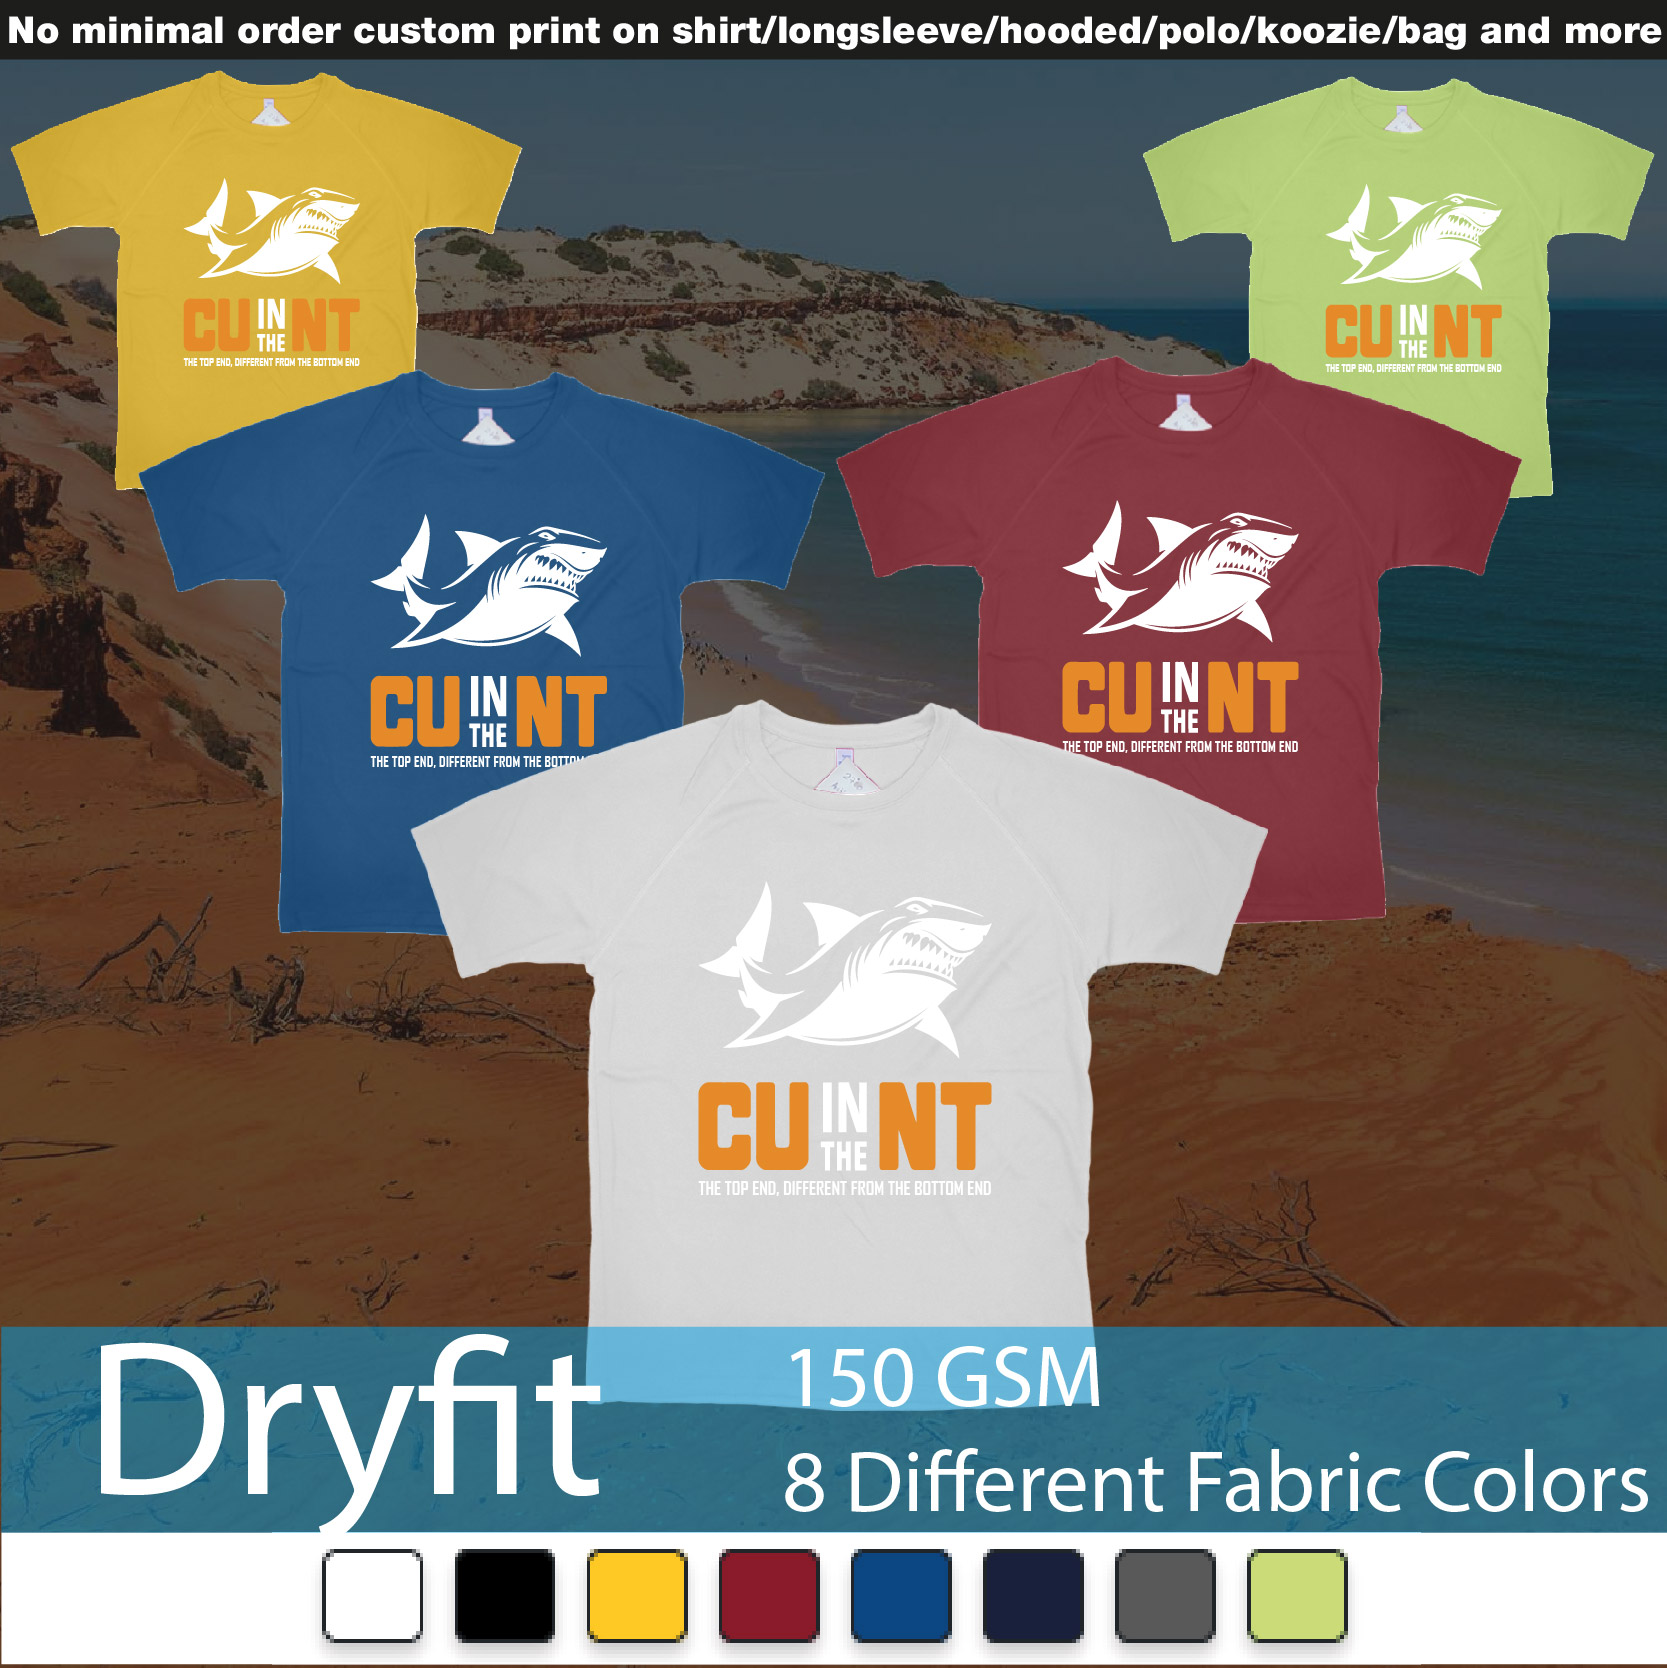 Cu In The Nt Northern Territory Shark Dryfit Tshirts Samples On Demand Printing Bali